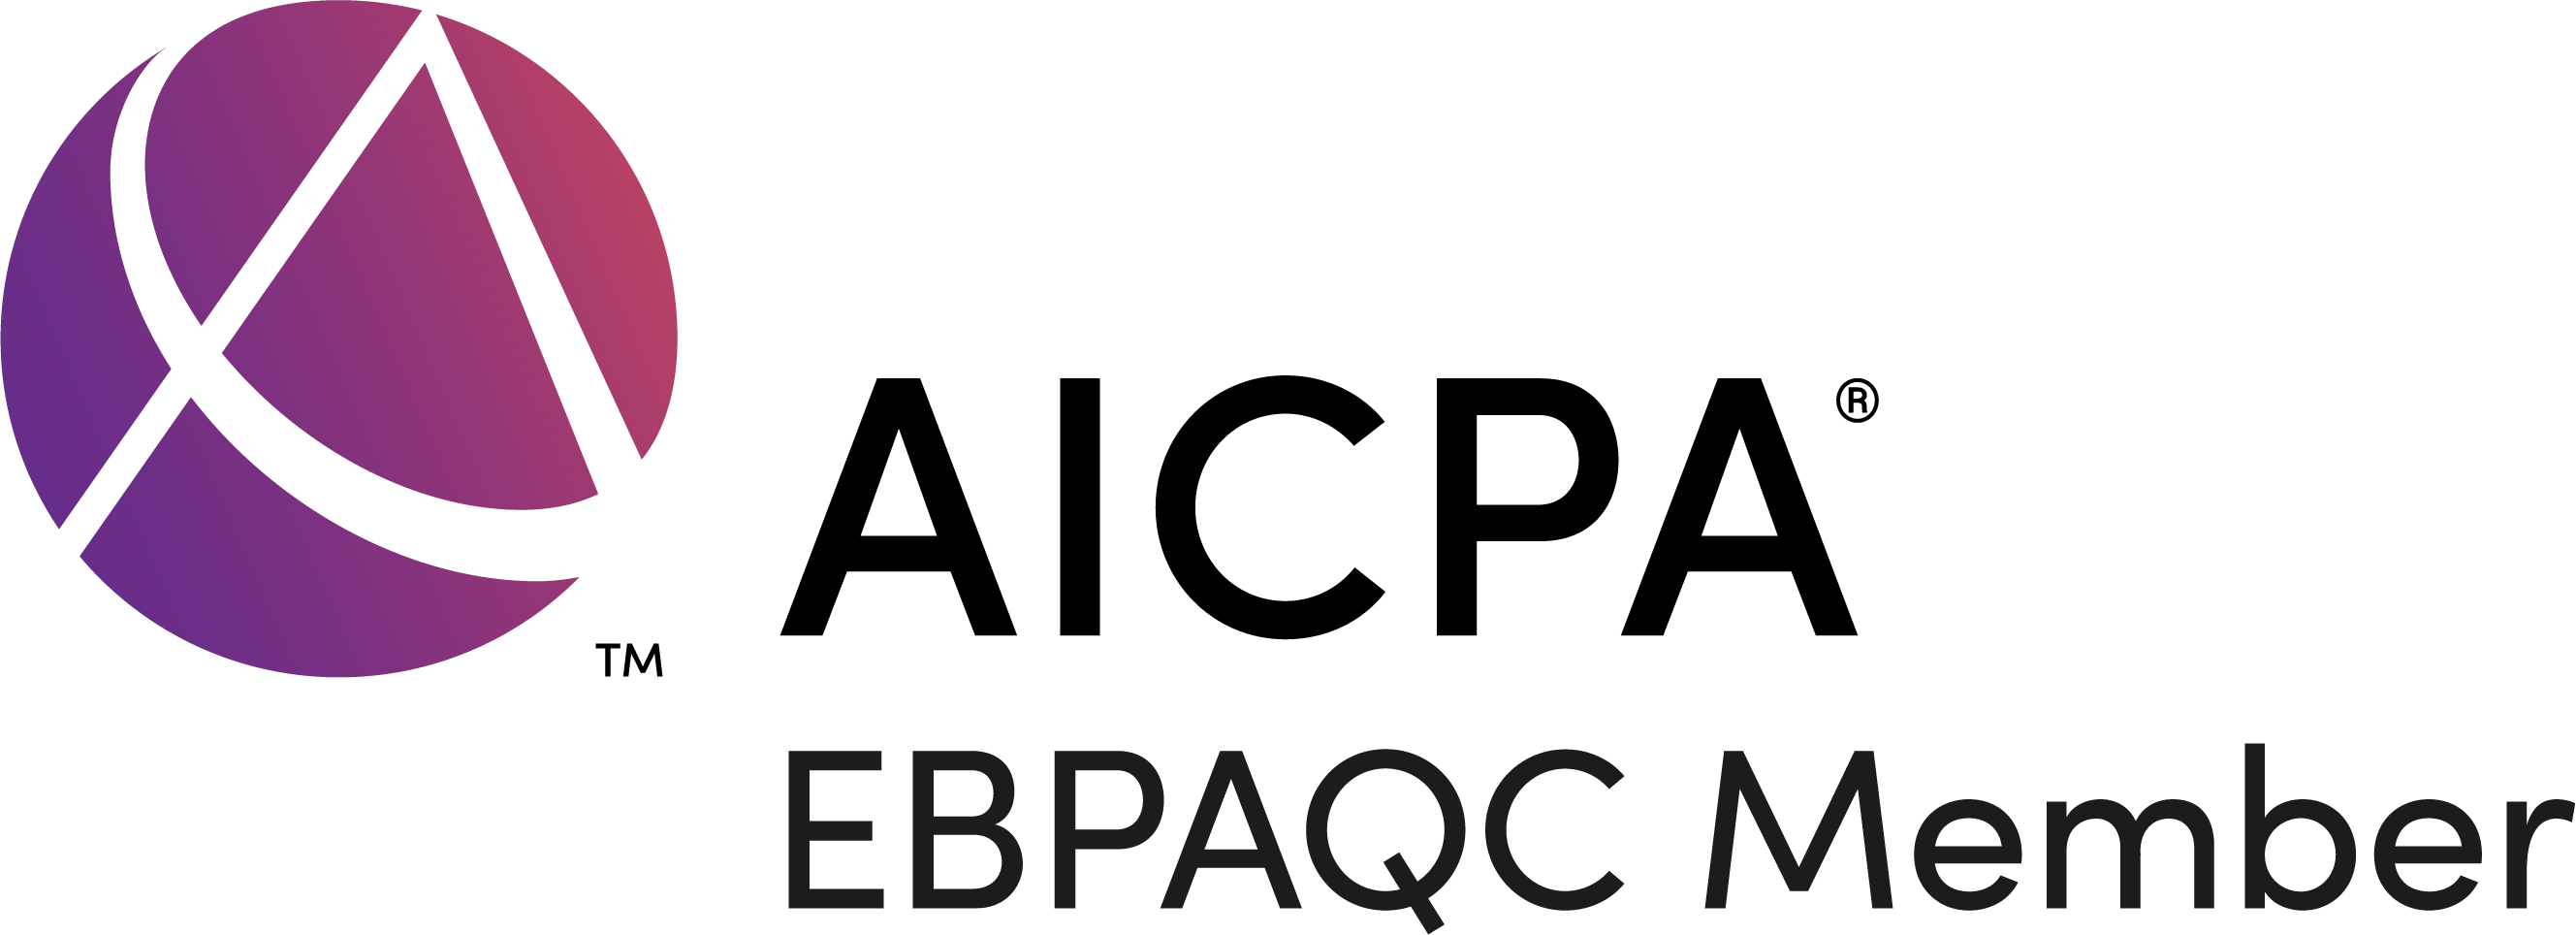 aicpa-ebpaqc-member-color